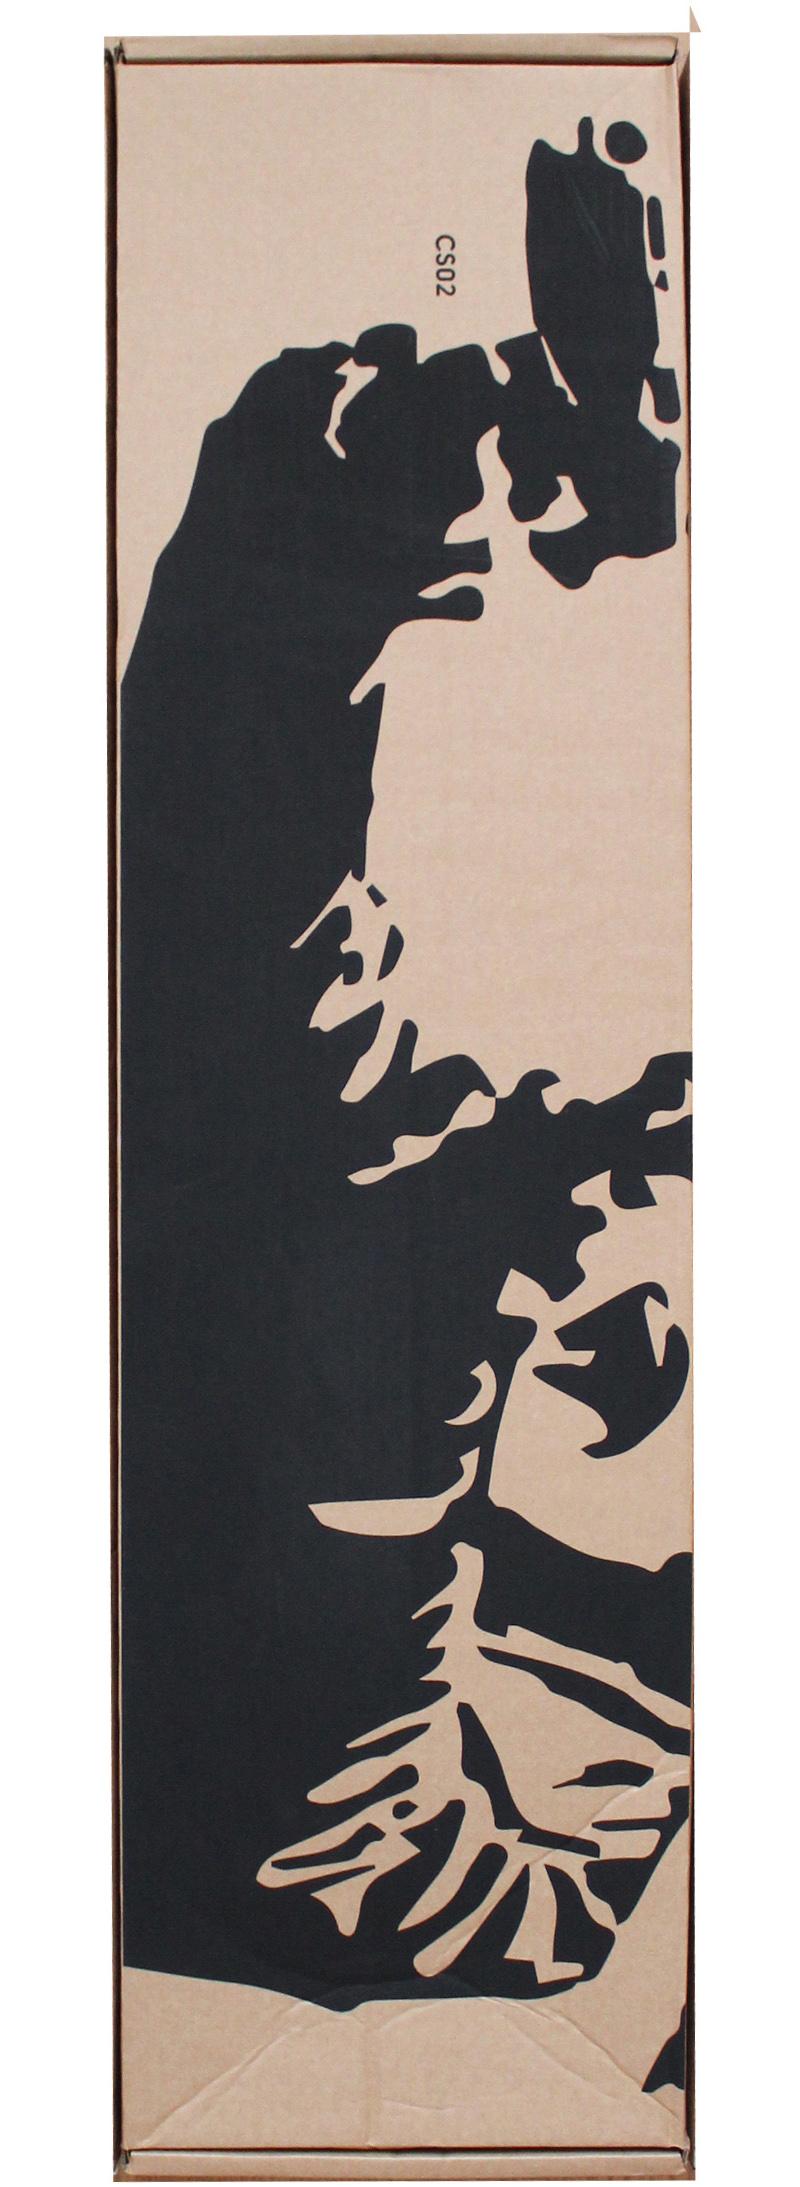 Test Press (Monkey Detonator) skateboard deck - Print by Banksy